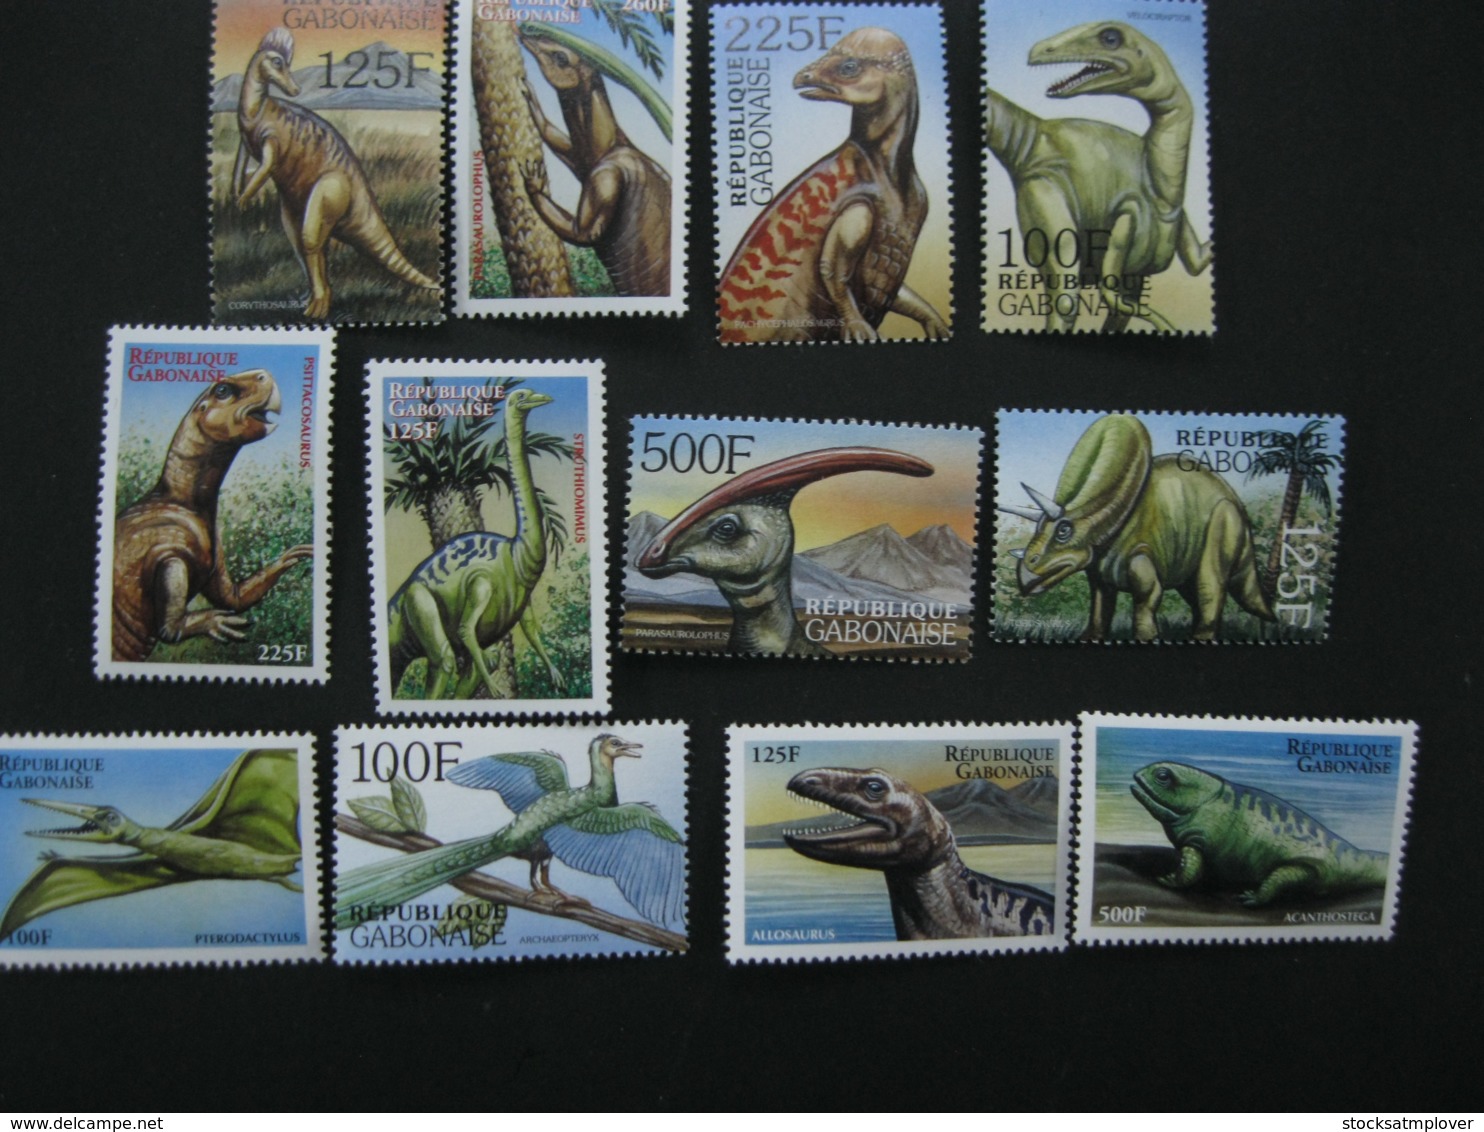 Gabon  2000 Dinosaurs  12 Stamps  SCOTT No.1000-1011  I201807 - Gabon